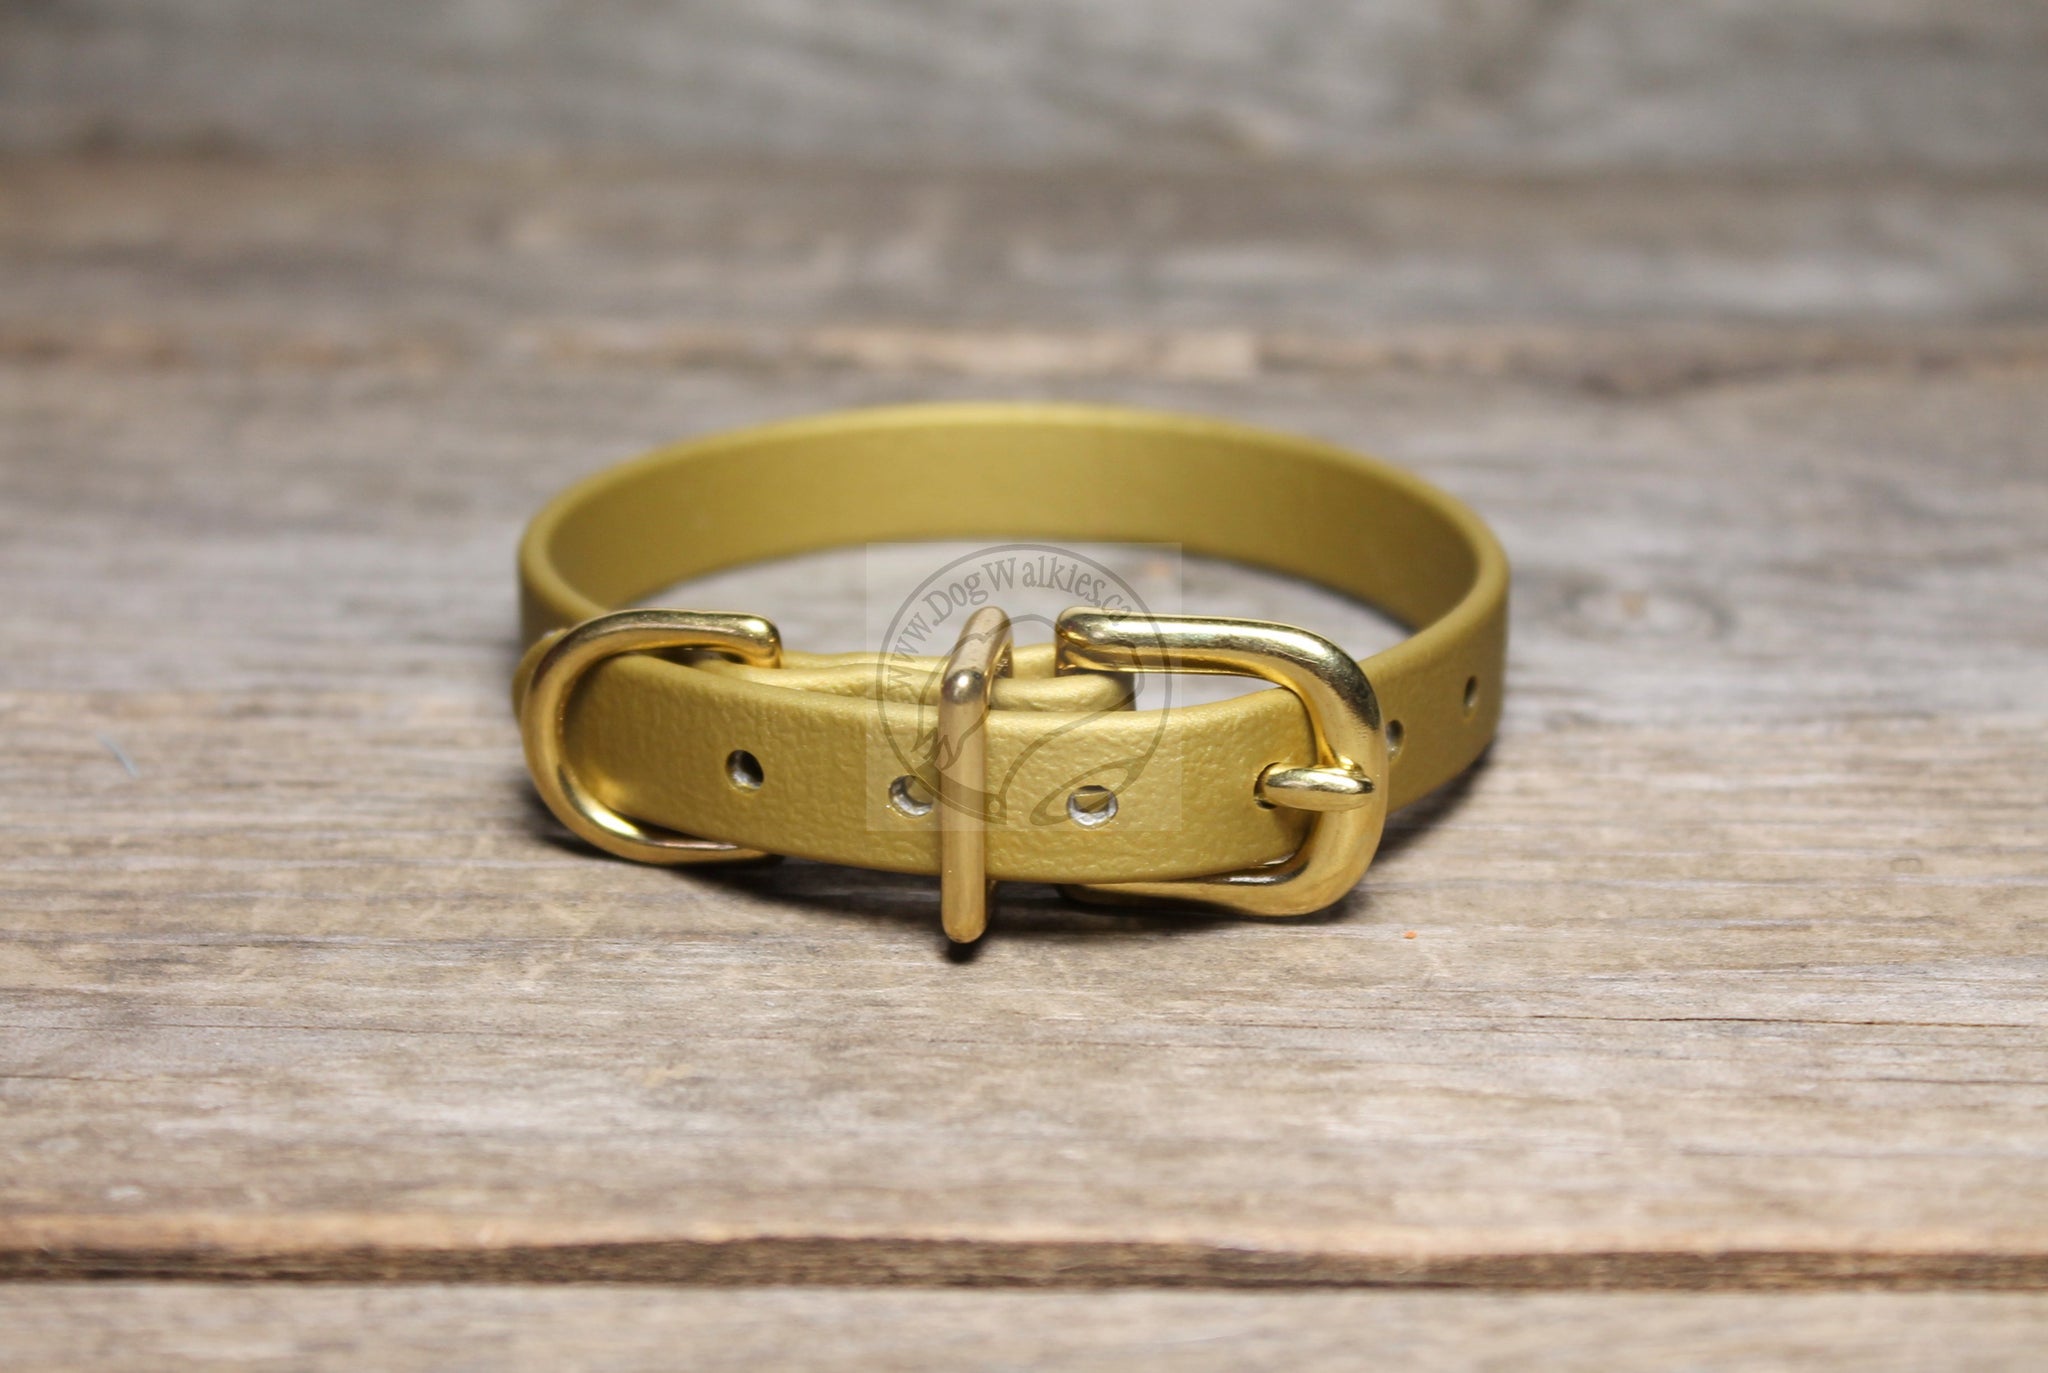 Gold Biothane Small Dog Collar - 1/2" (12mm) wide